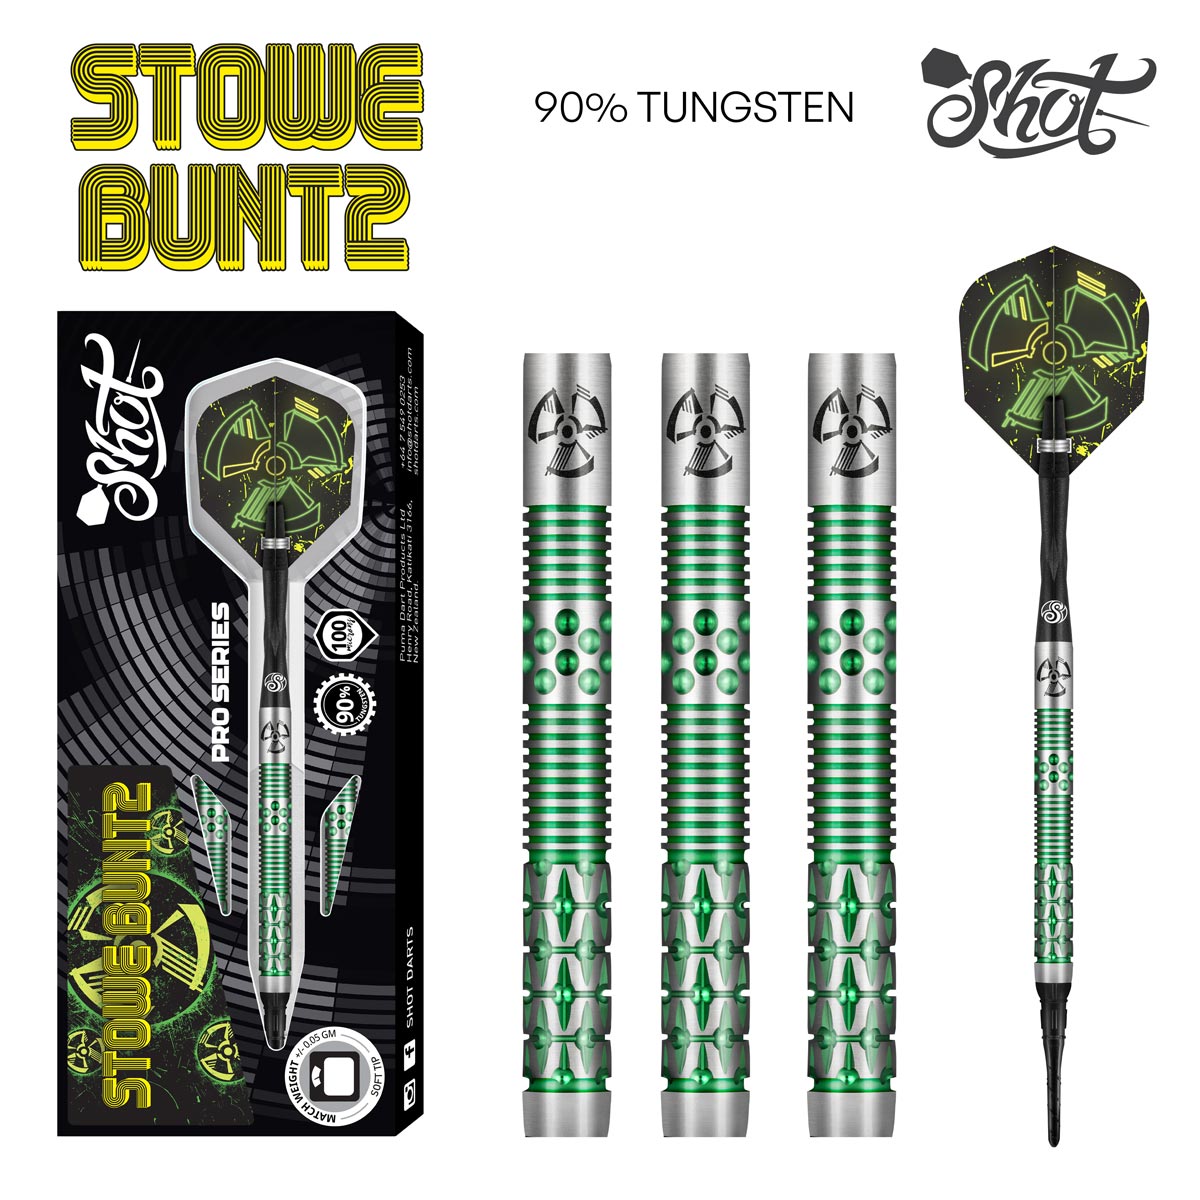 Shot Pro Series - Stowe Buntz V2 Soft Tip Dart Set - 90% Tungsten Barrels  